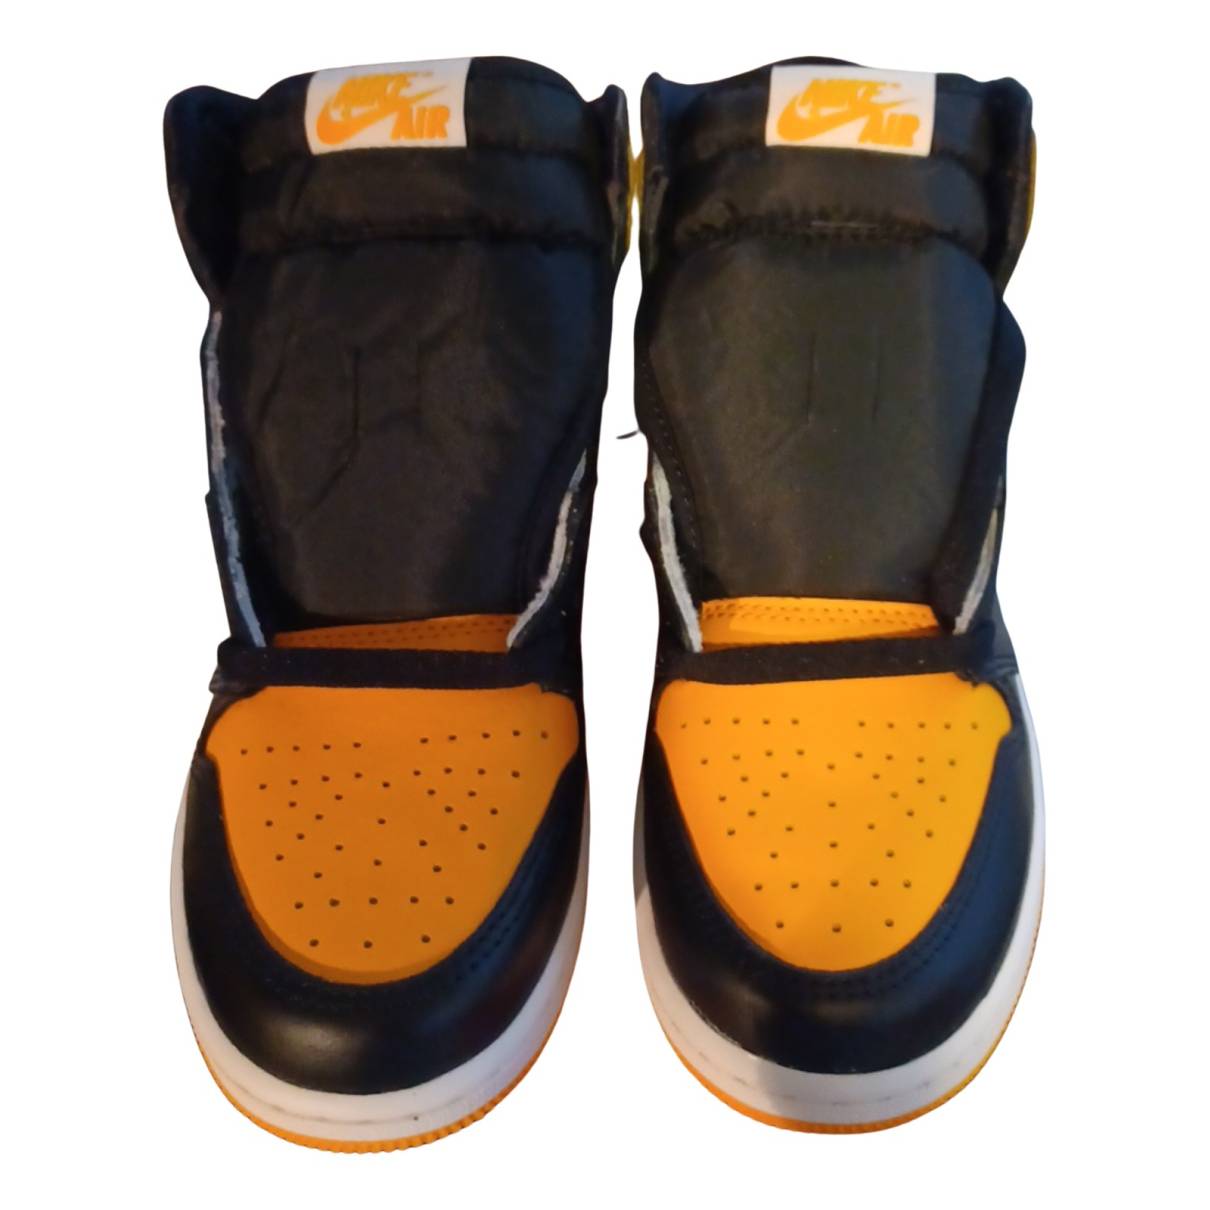 Air Jordan 1 leather first shoes JORDAN